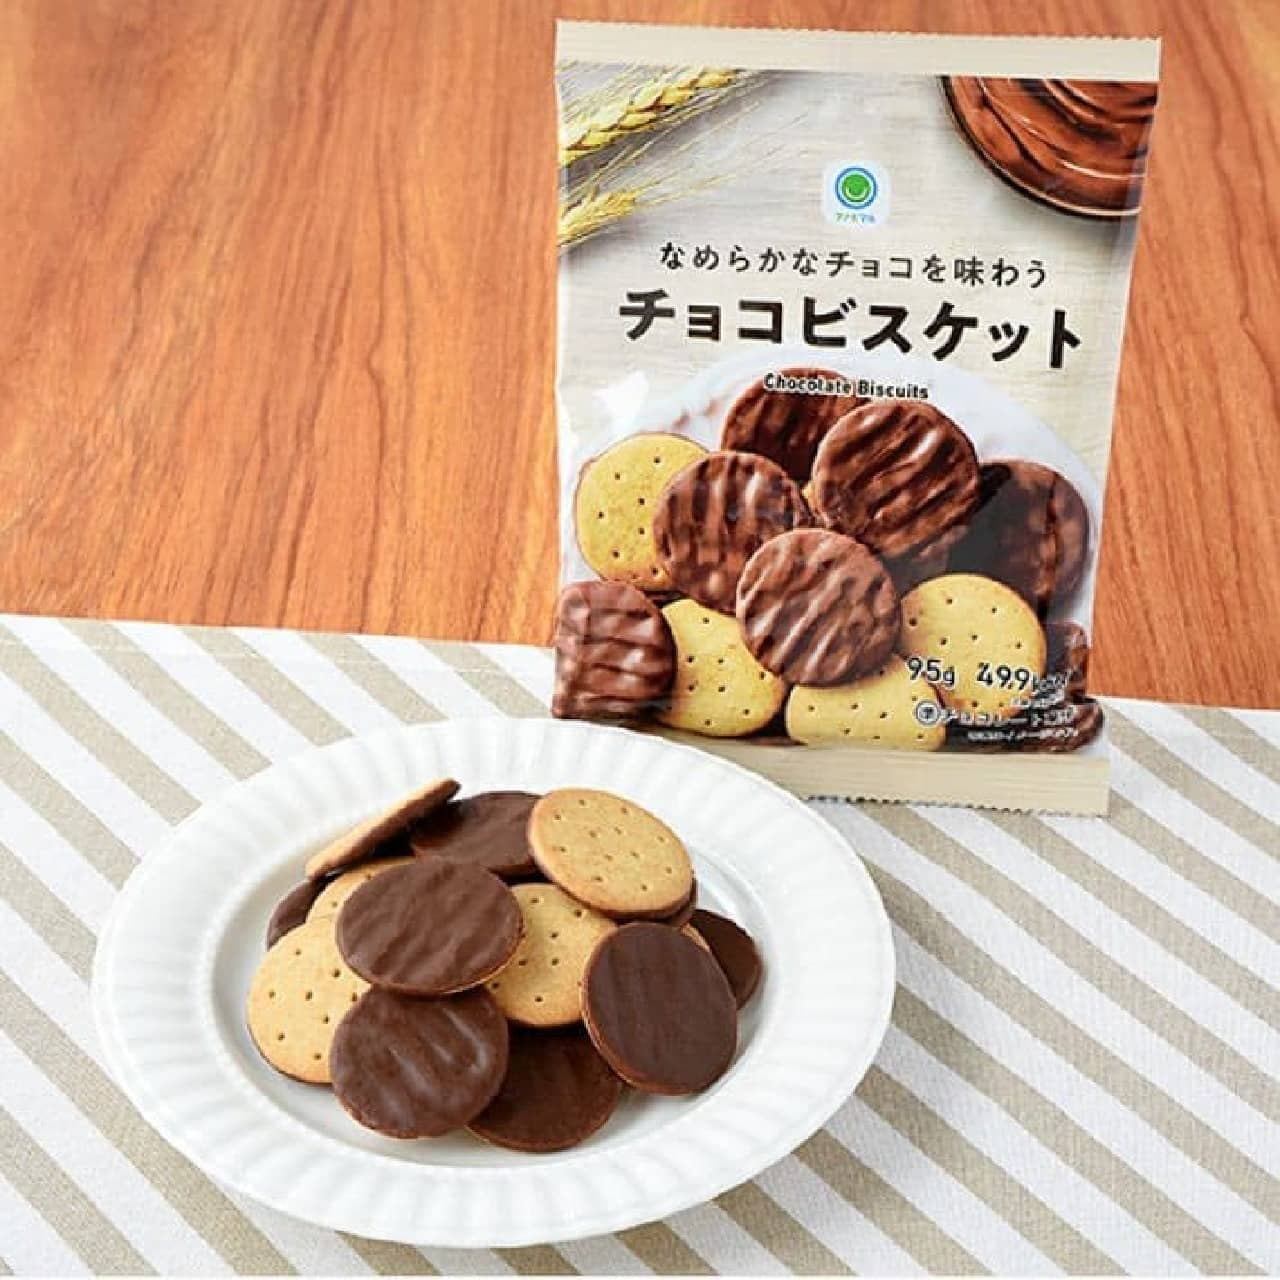 FamilyMart "Smooth Chocolate Tasting Chocolate Biscuits".